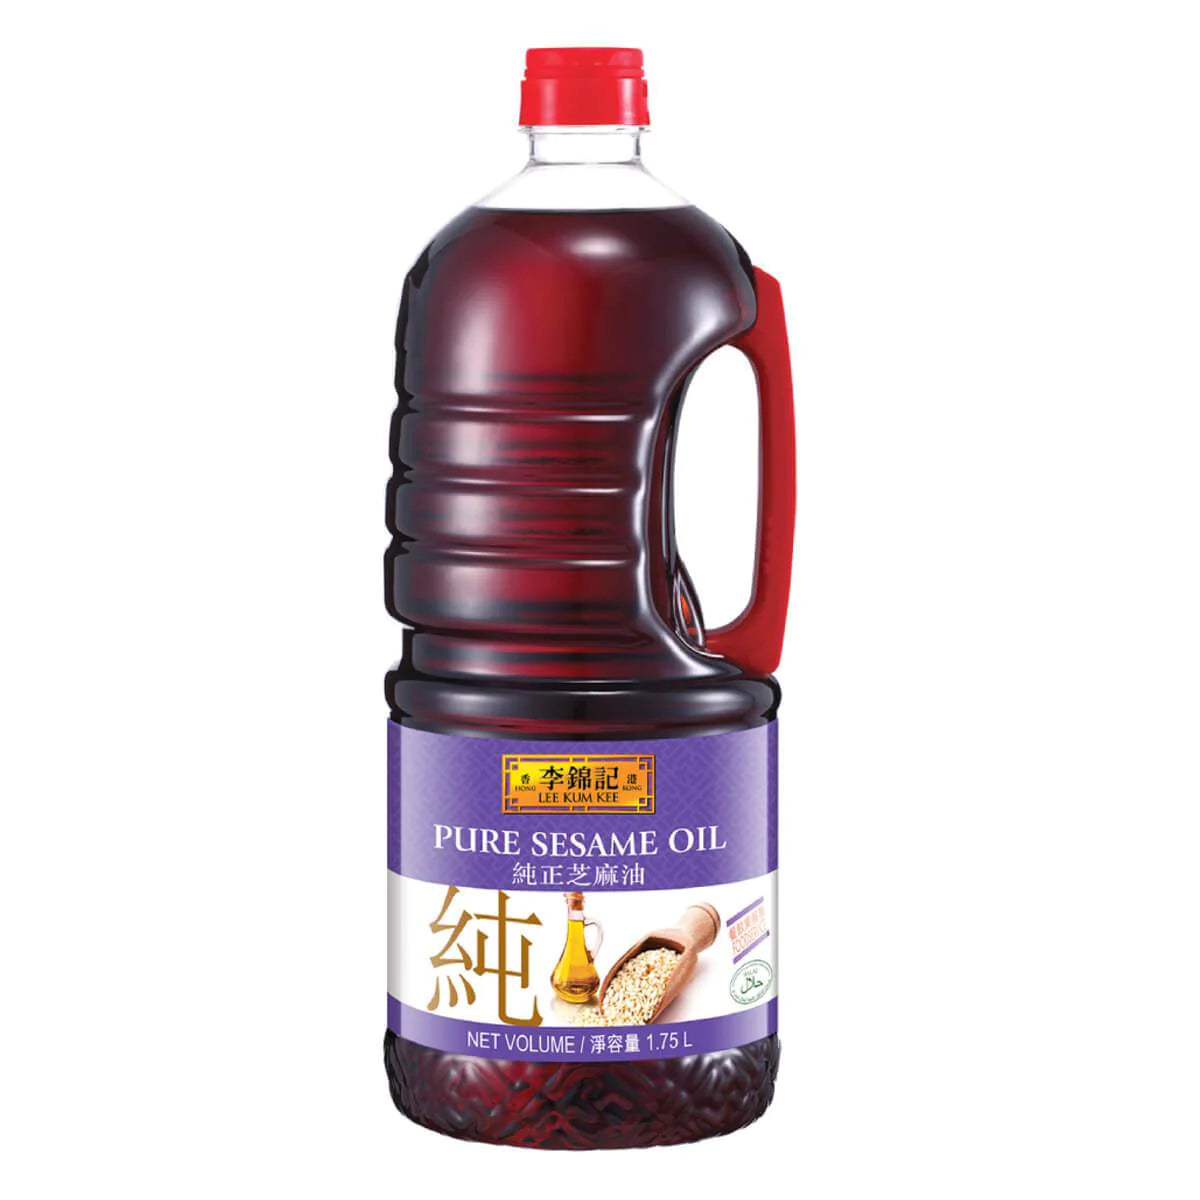 Pure Sesame Oil 1.75L